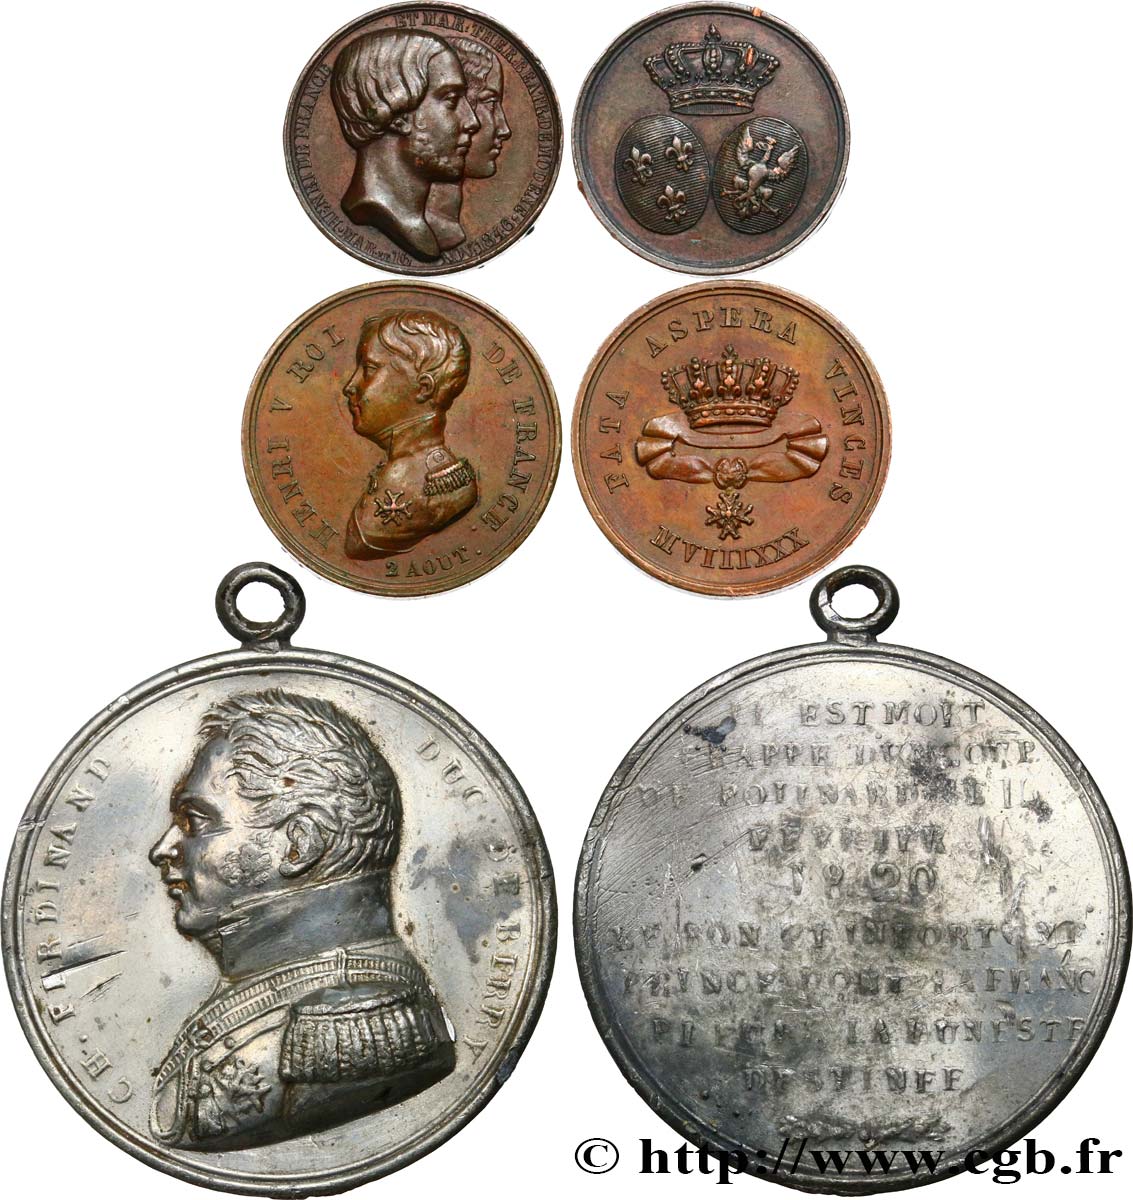 HENRY V COUNT OF CHAMBORD Lot de 3 médailles relatives à la vie d’Henri V, comte de Chambord XF